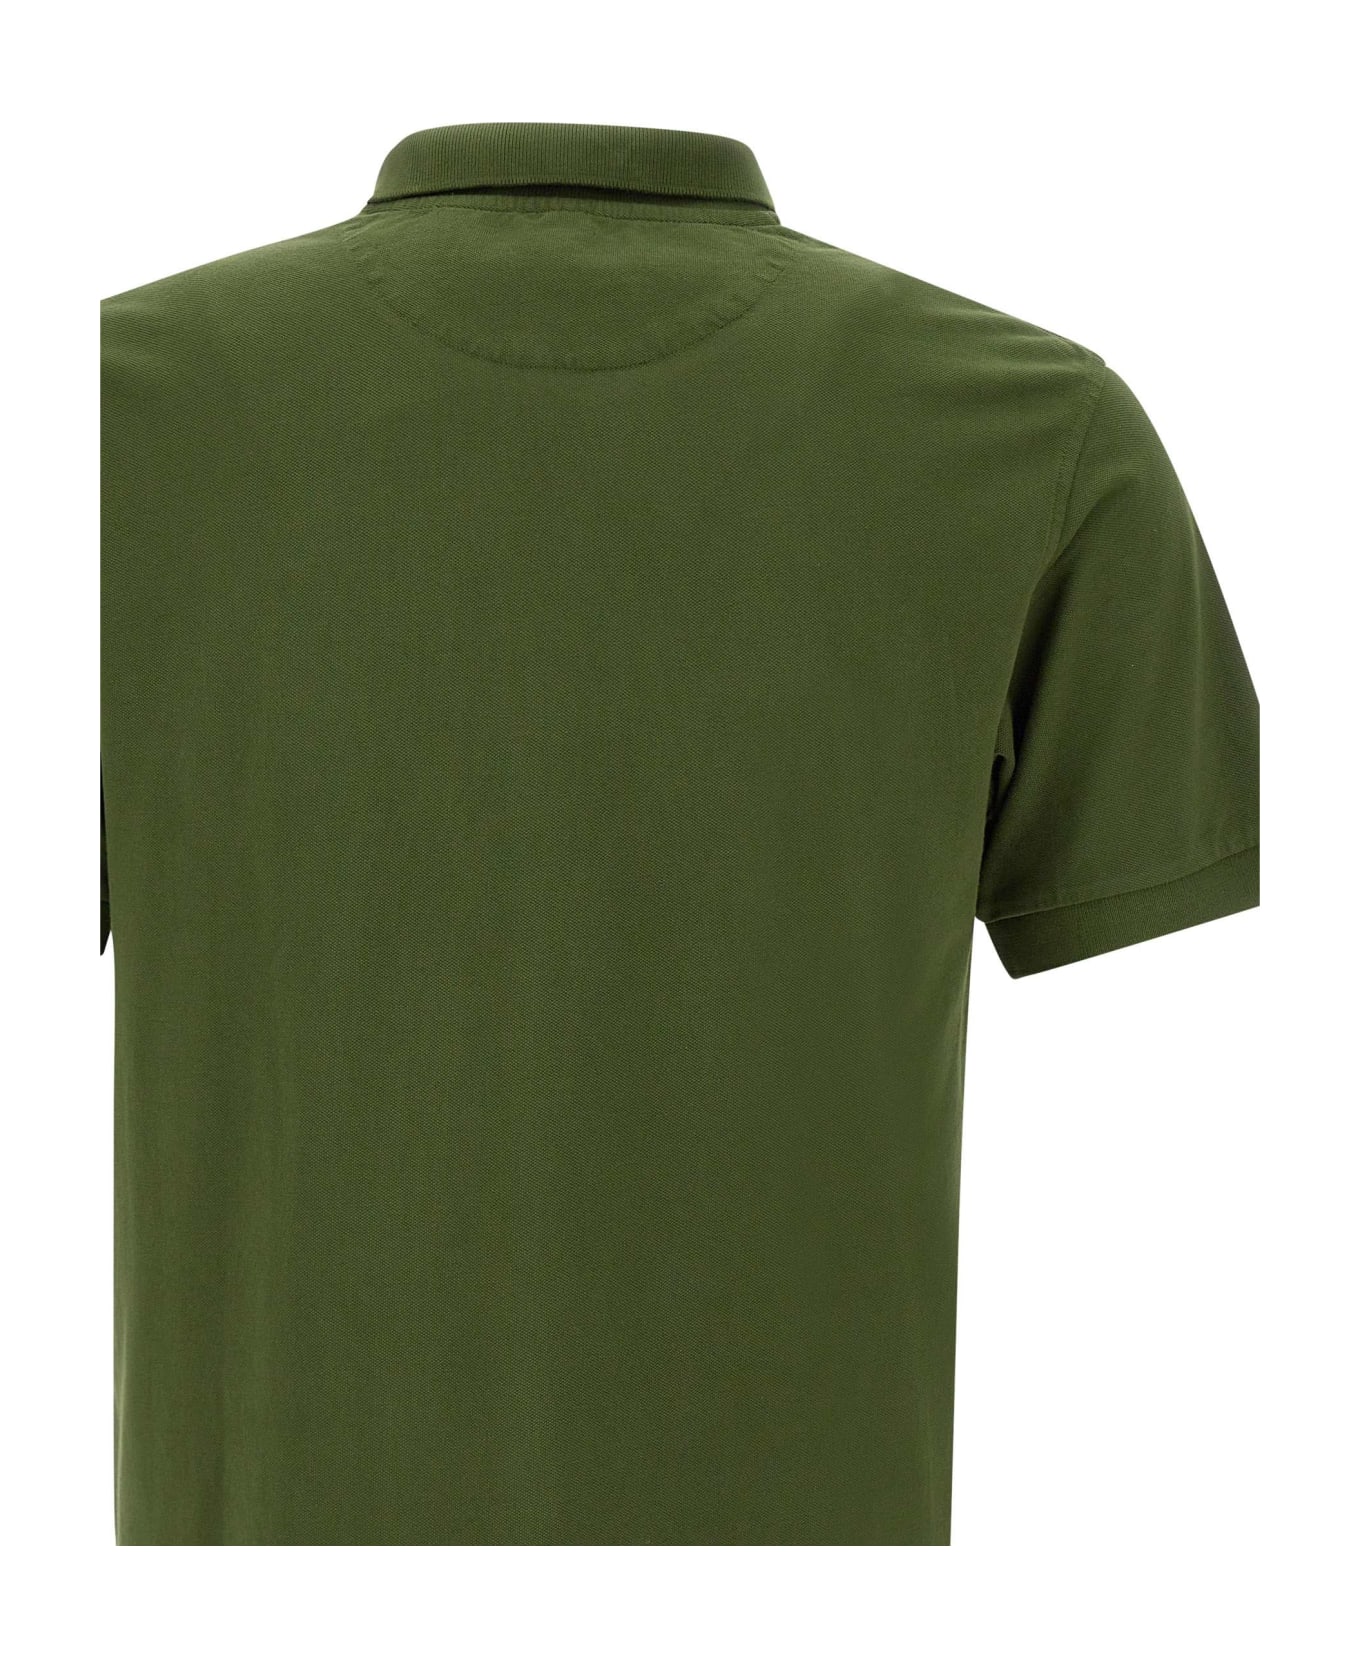 Sun 68 "cold Garment Dye" Cotton Polo Shirt - GREEN